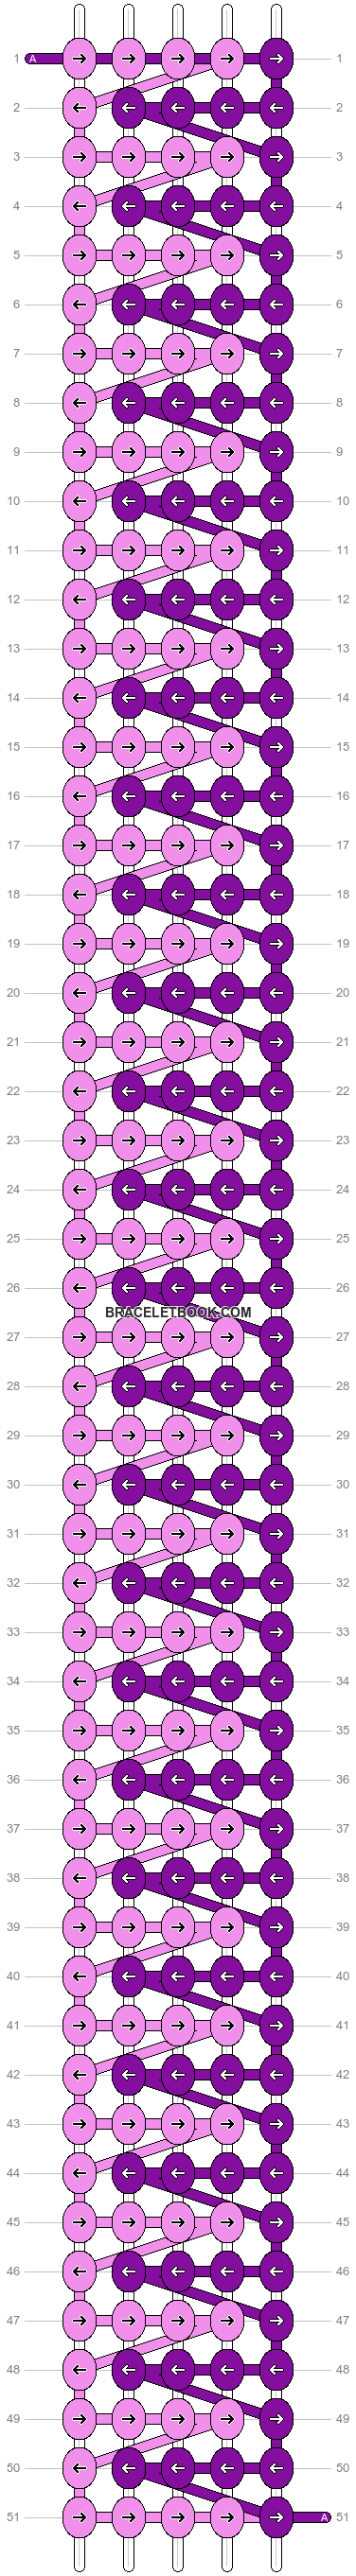 Alpha pattern #11523 variation #17326 pattern